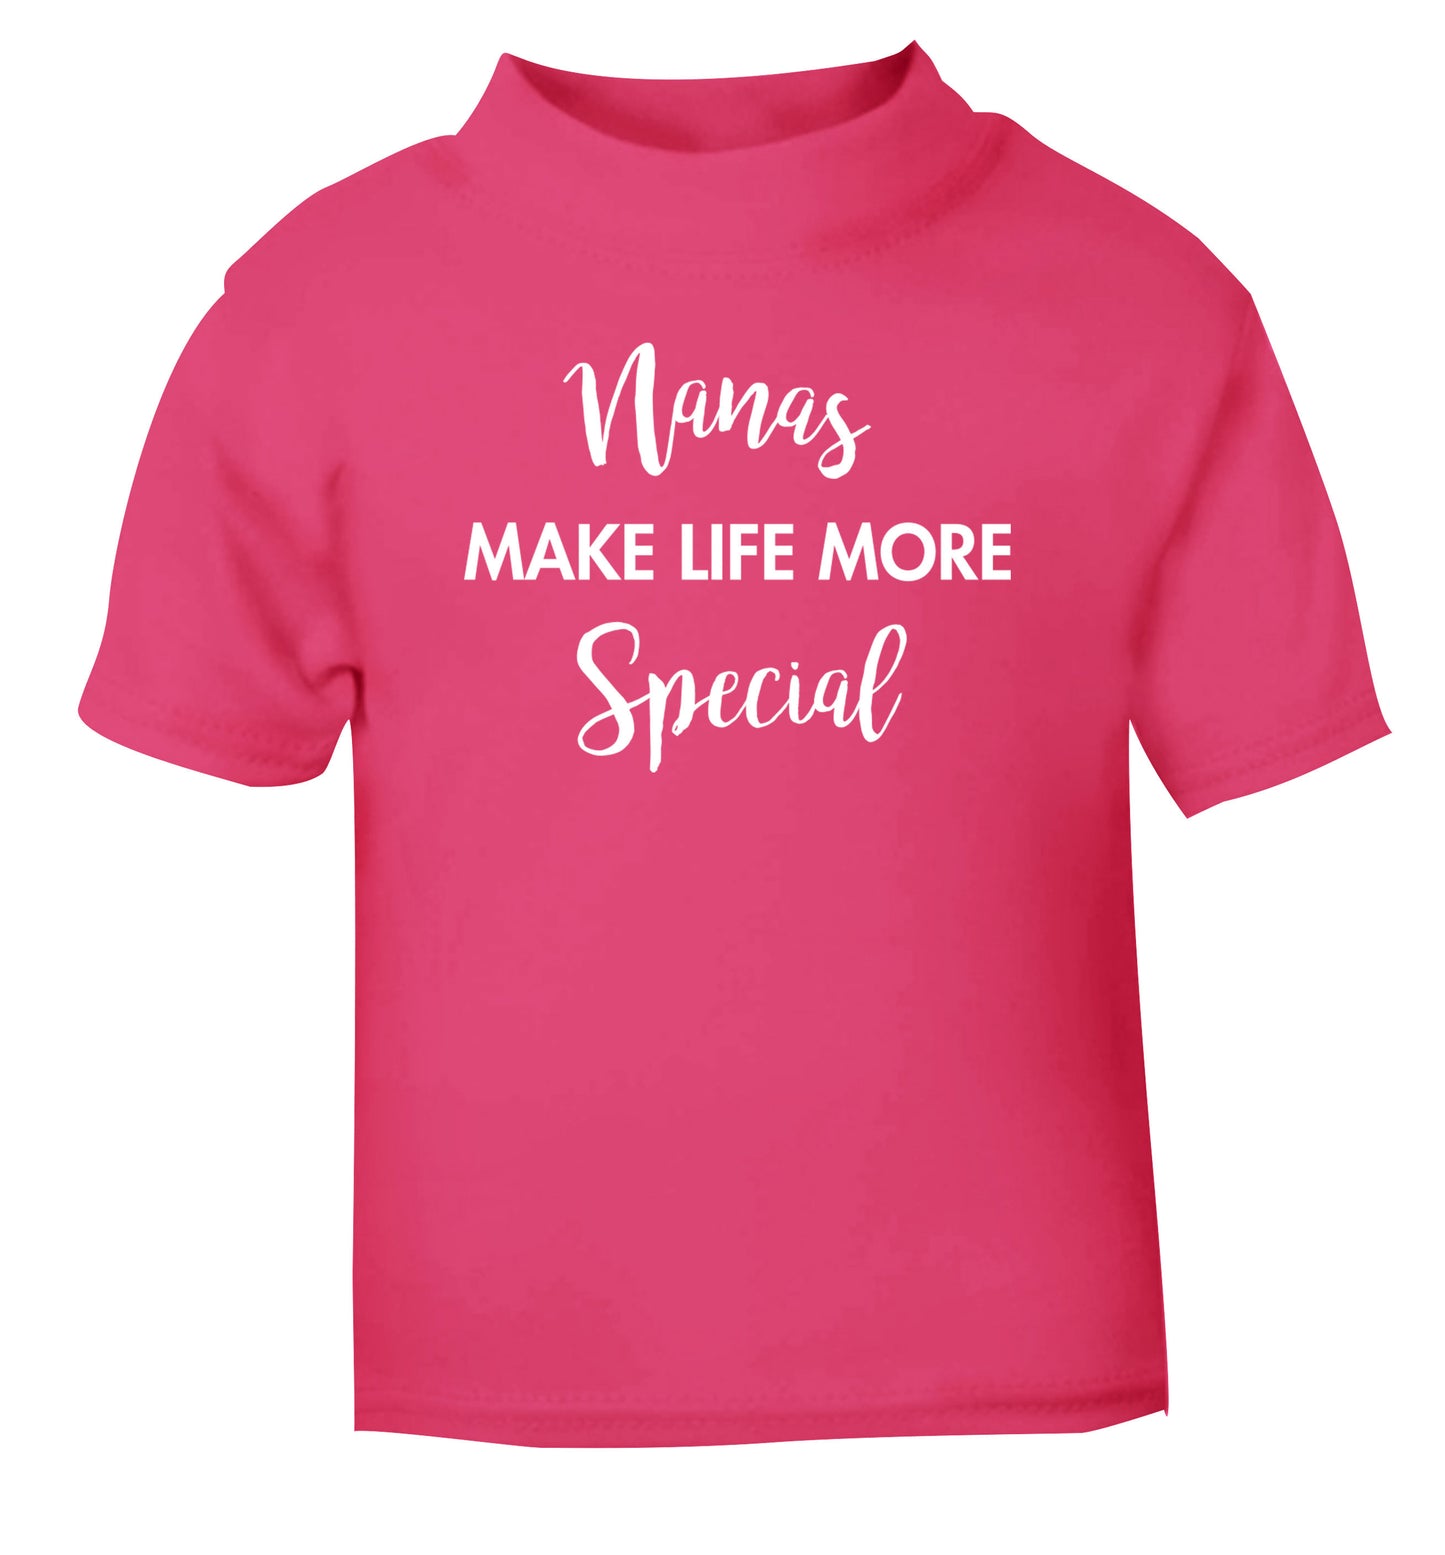 Nanas make life more special pink Baby Toddler Tshirt 2 Years